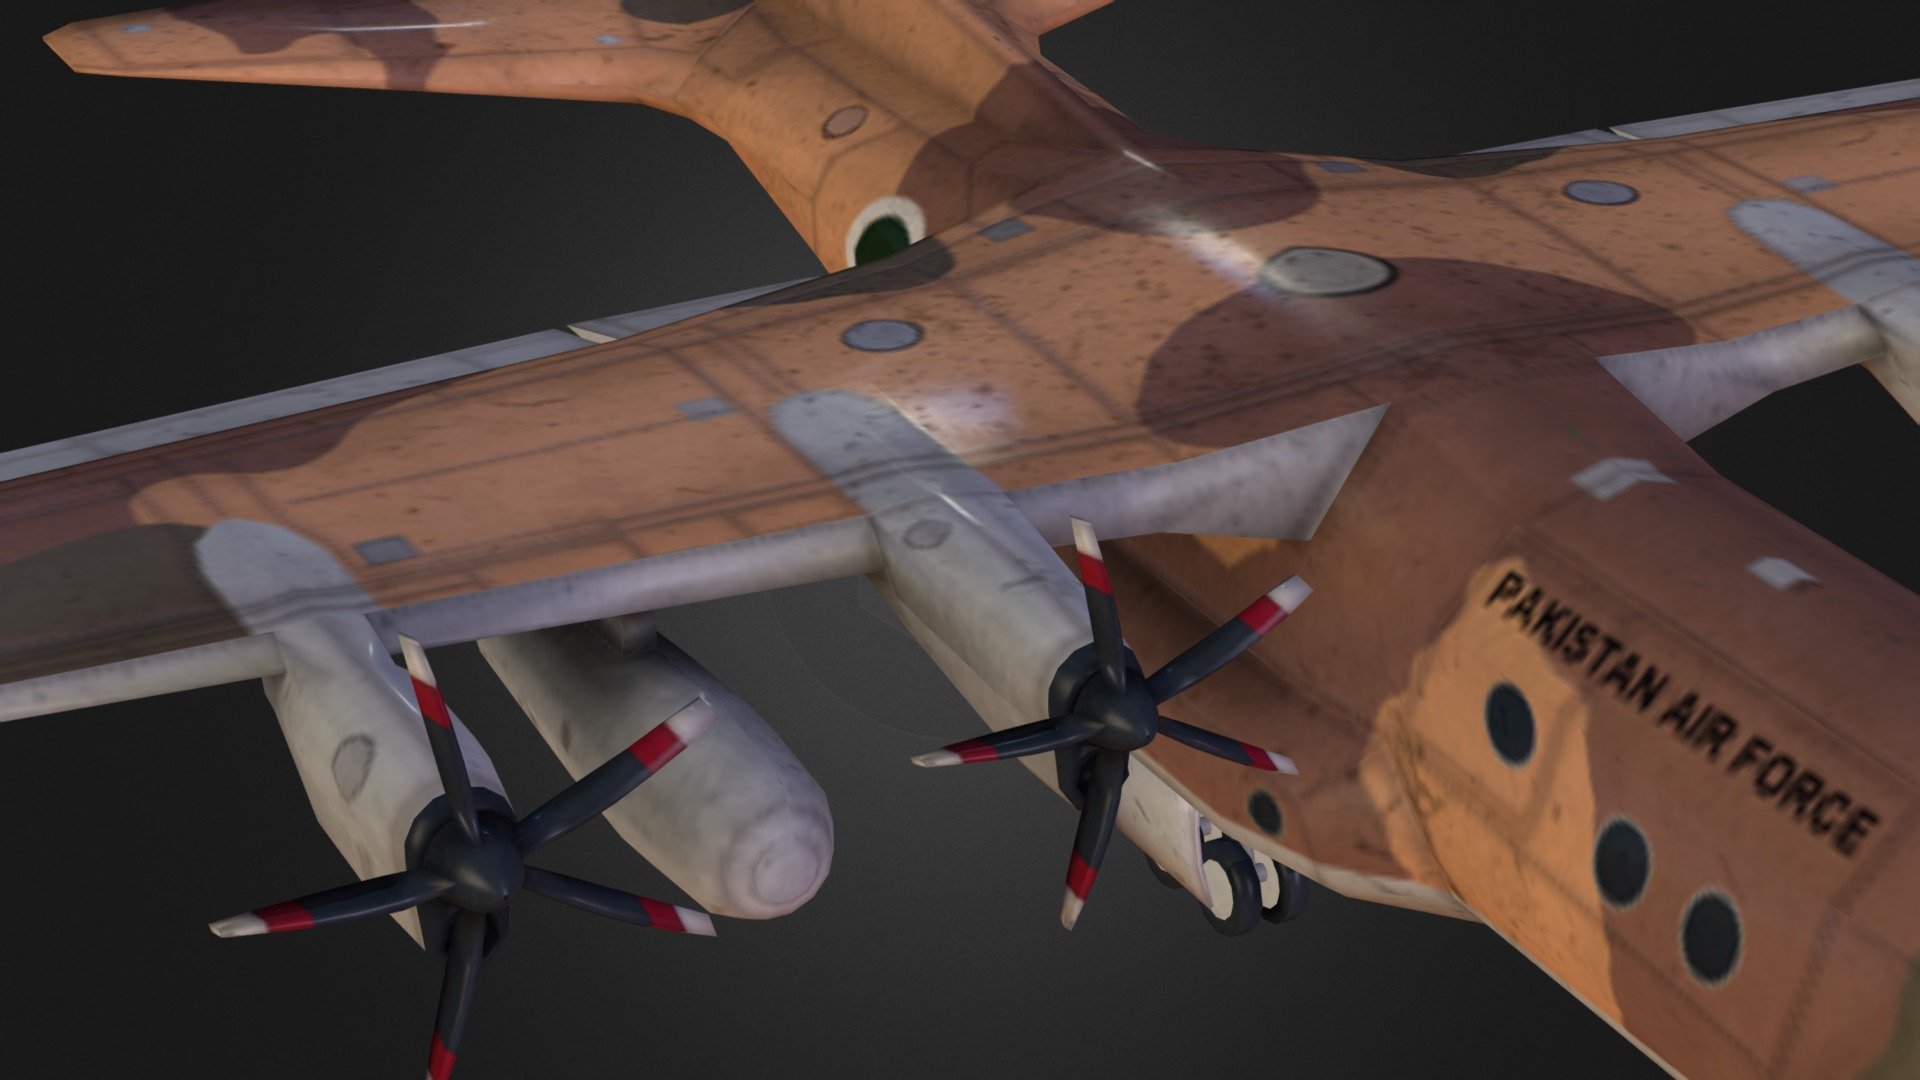 A low poly Pakistani Air Force plane (C 130 J) for a game project under development.
http://bharatnag.tumblr.com - C130J - 3D model by bharatnag 3d model